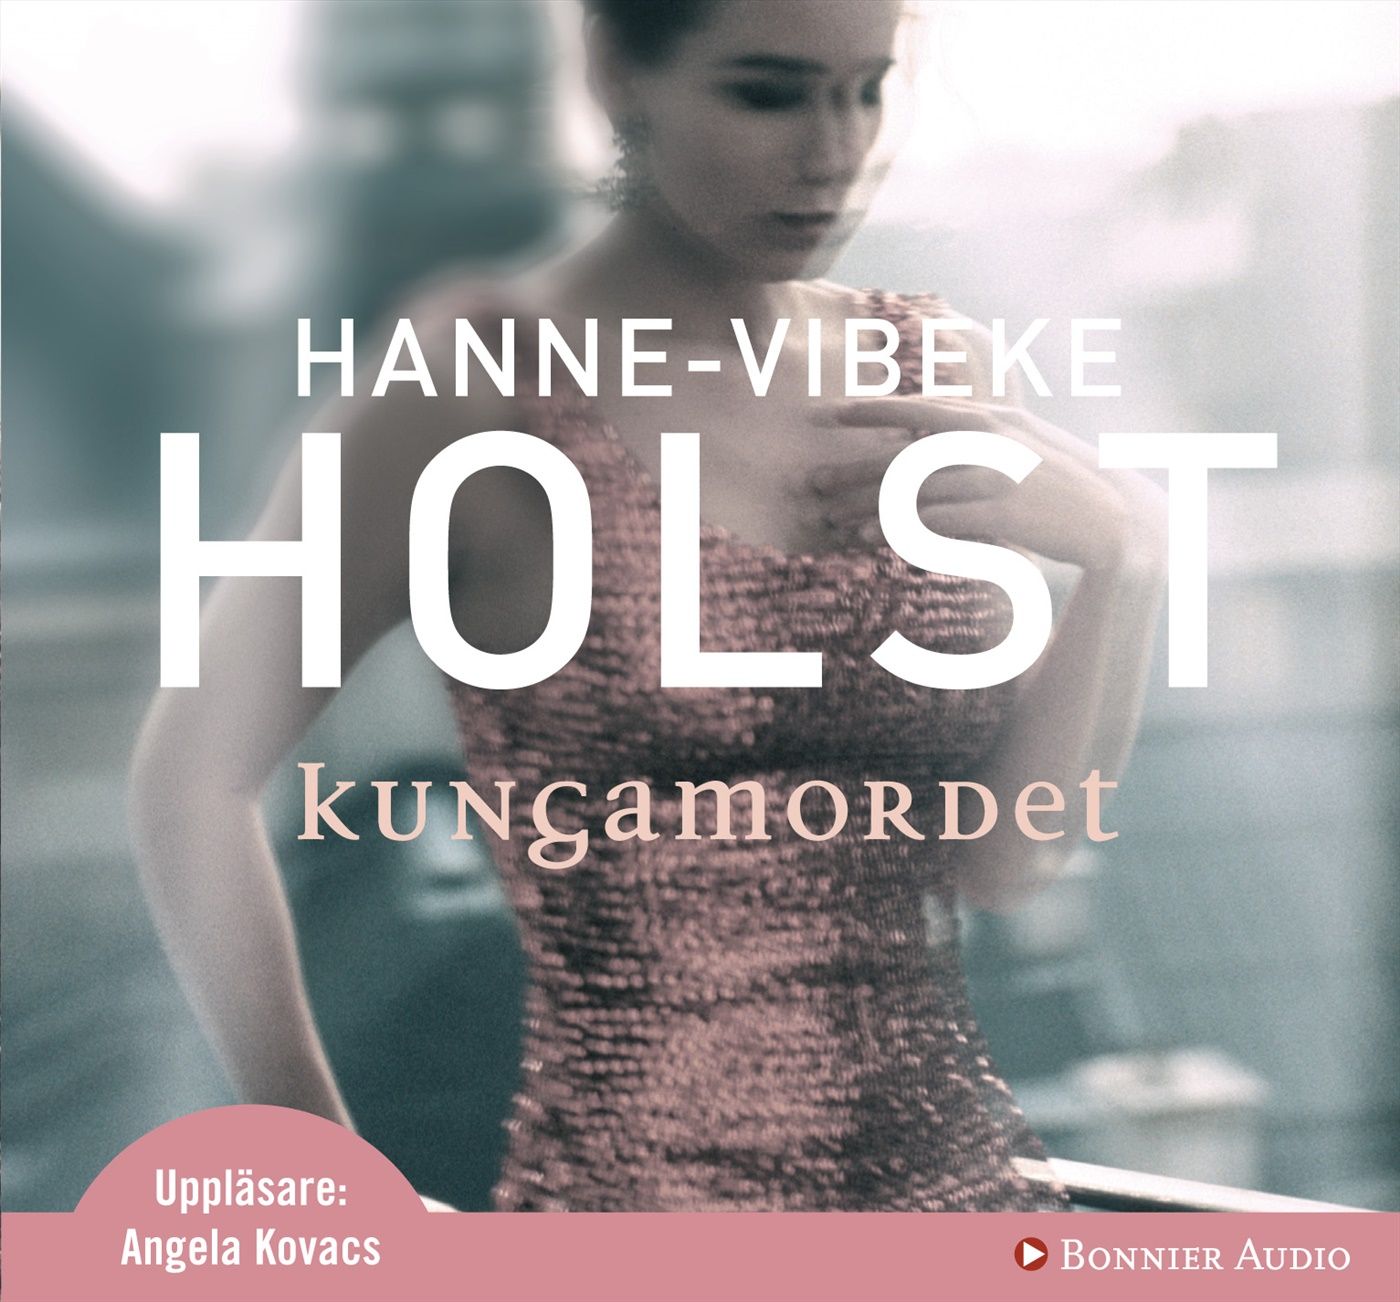 Kungamordet, ljudbok av Hanne-Vibeke Holst